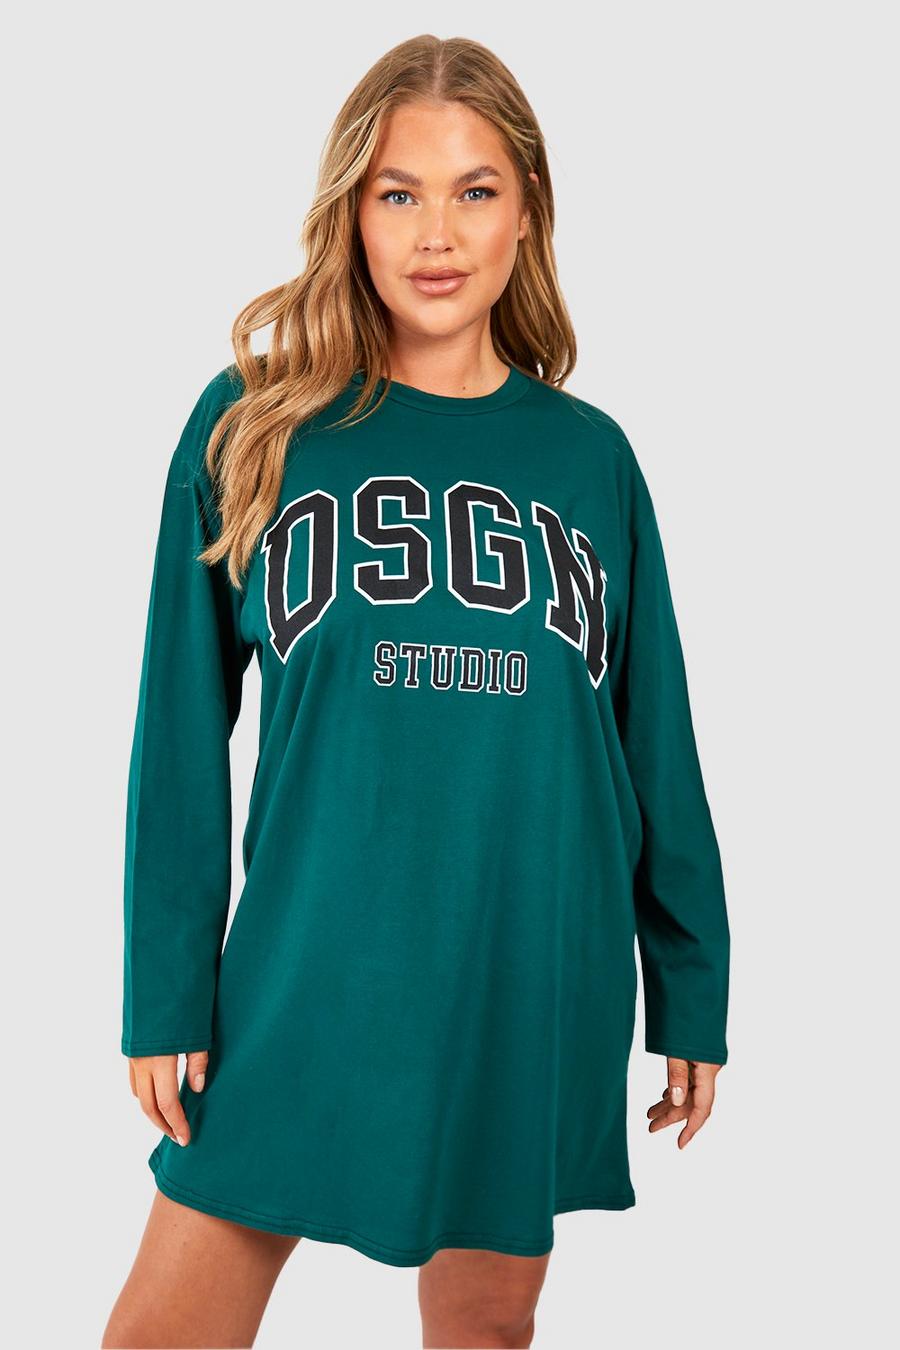 Grande taille - Robe t-shirt à manches longues et slogan Dsgn Studio, Forest image number 1